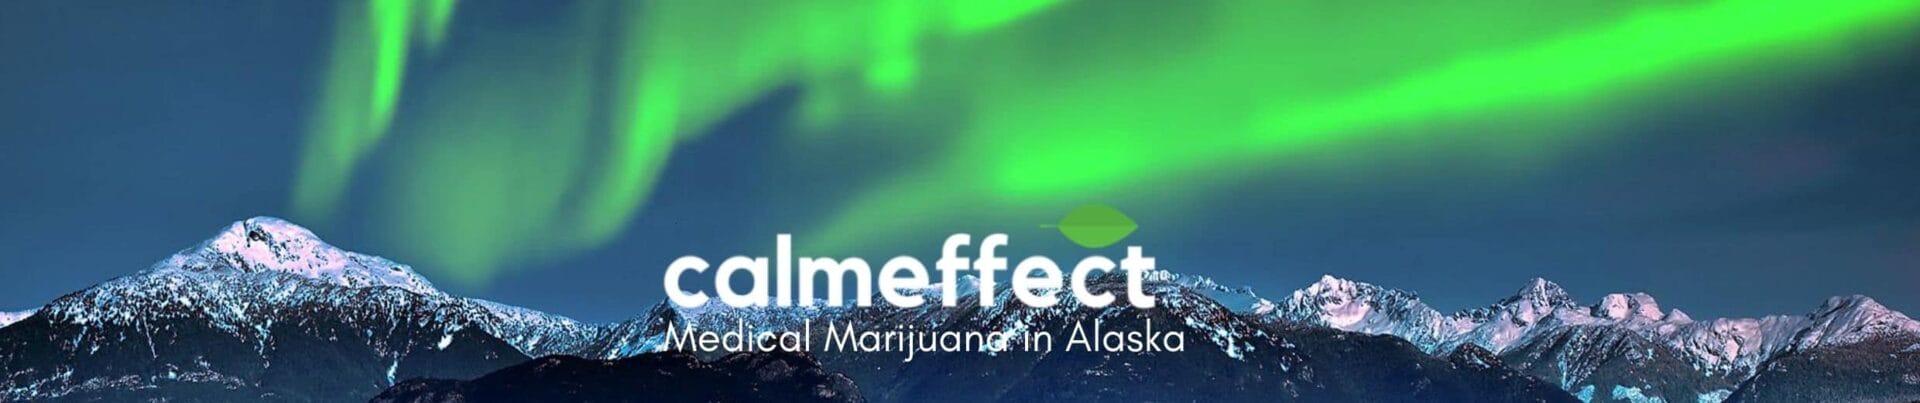 Medical Marijuana in Alaska